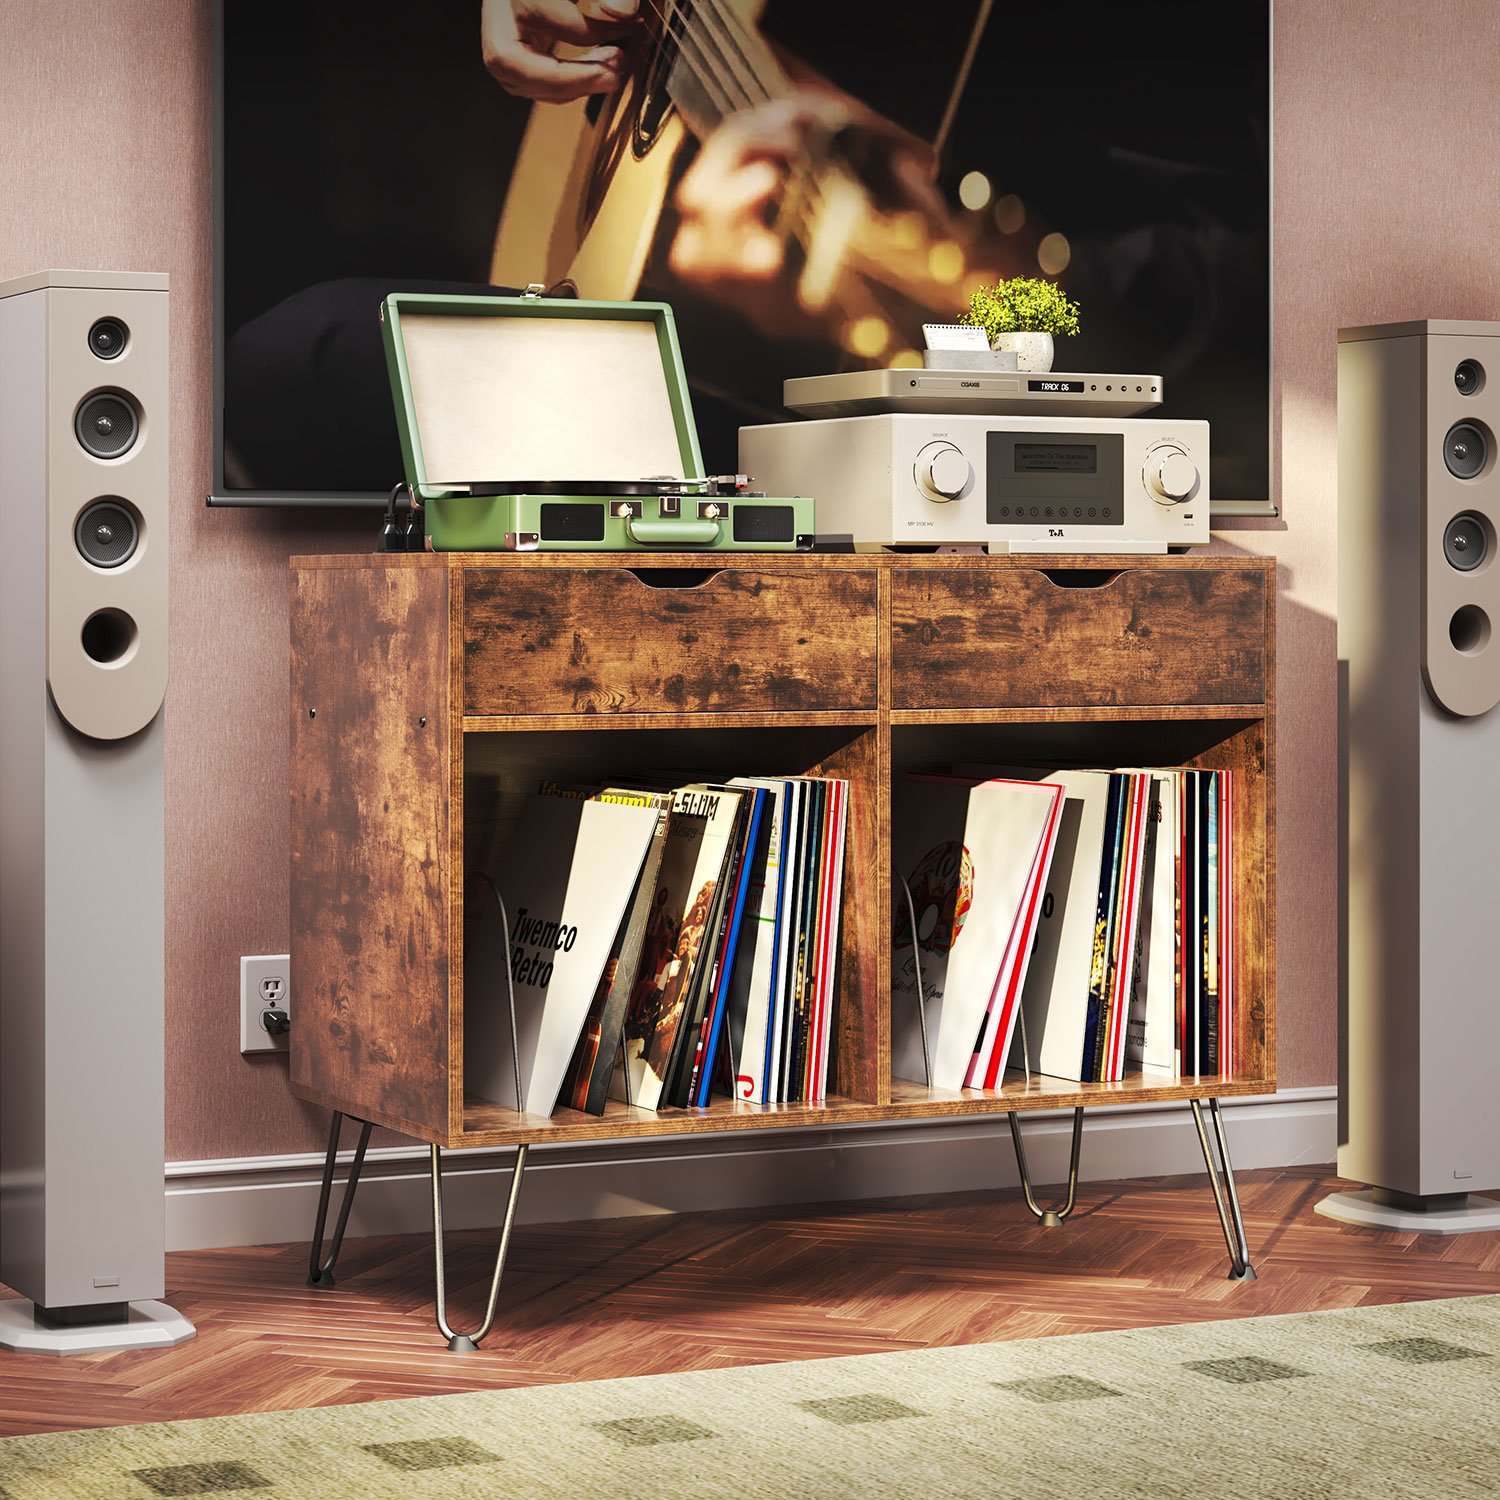 17 Stories Vinyl Record Player Turntable Stand Multimedia Media Shelves  Audio Rack  Reviews Wayfair